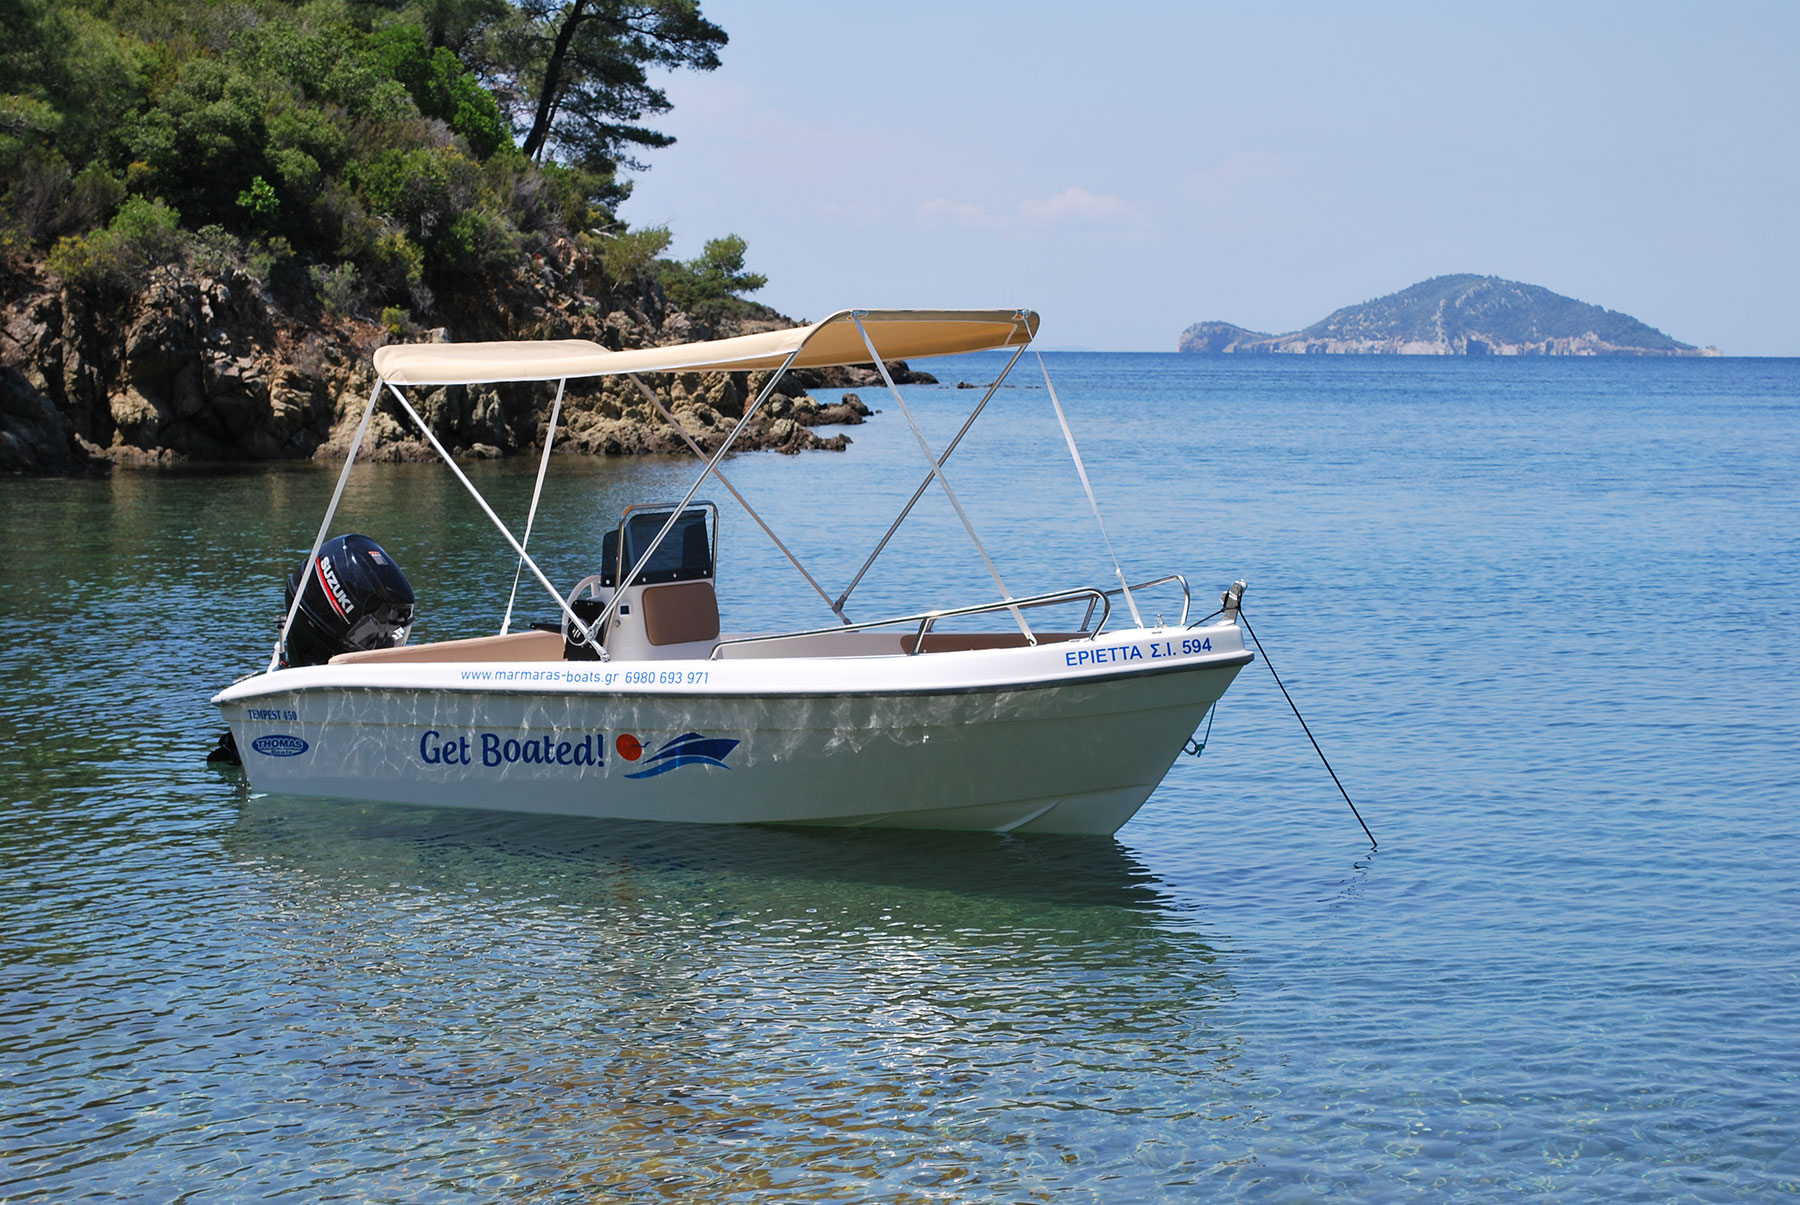 Marmaras Boats - Gallery - Image 17